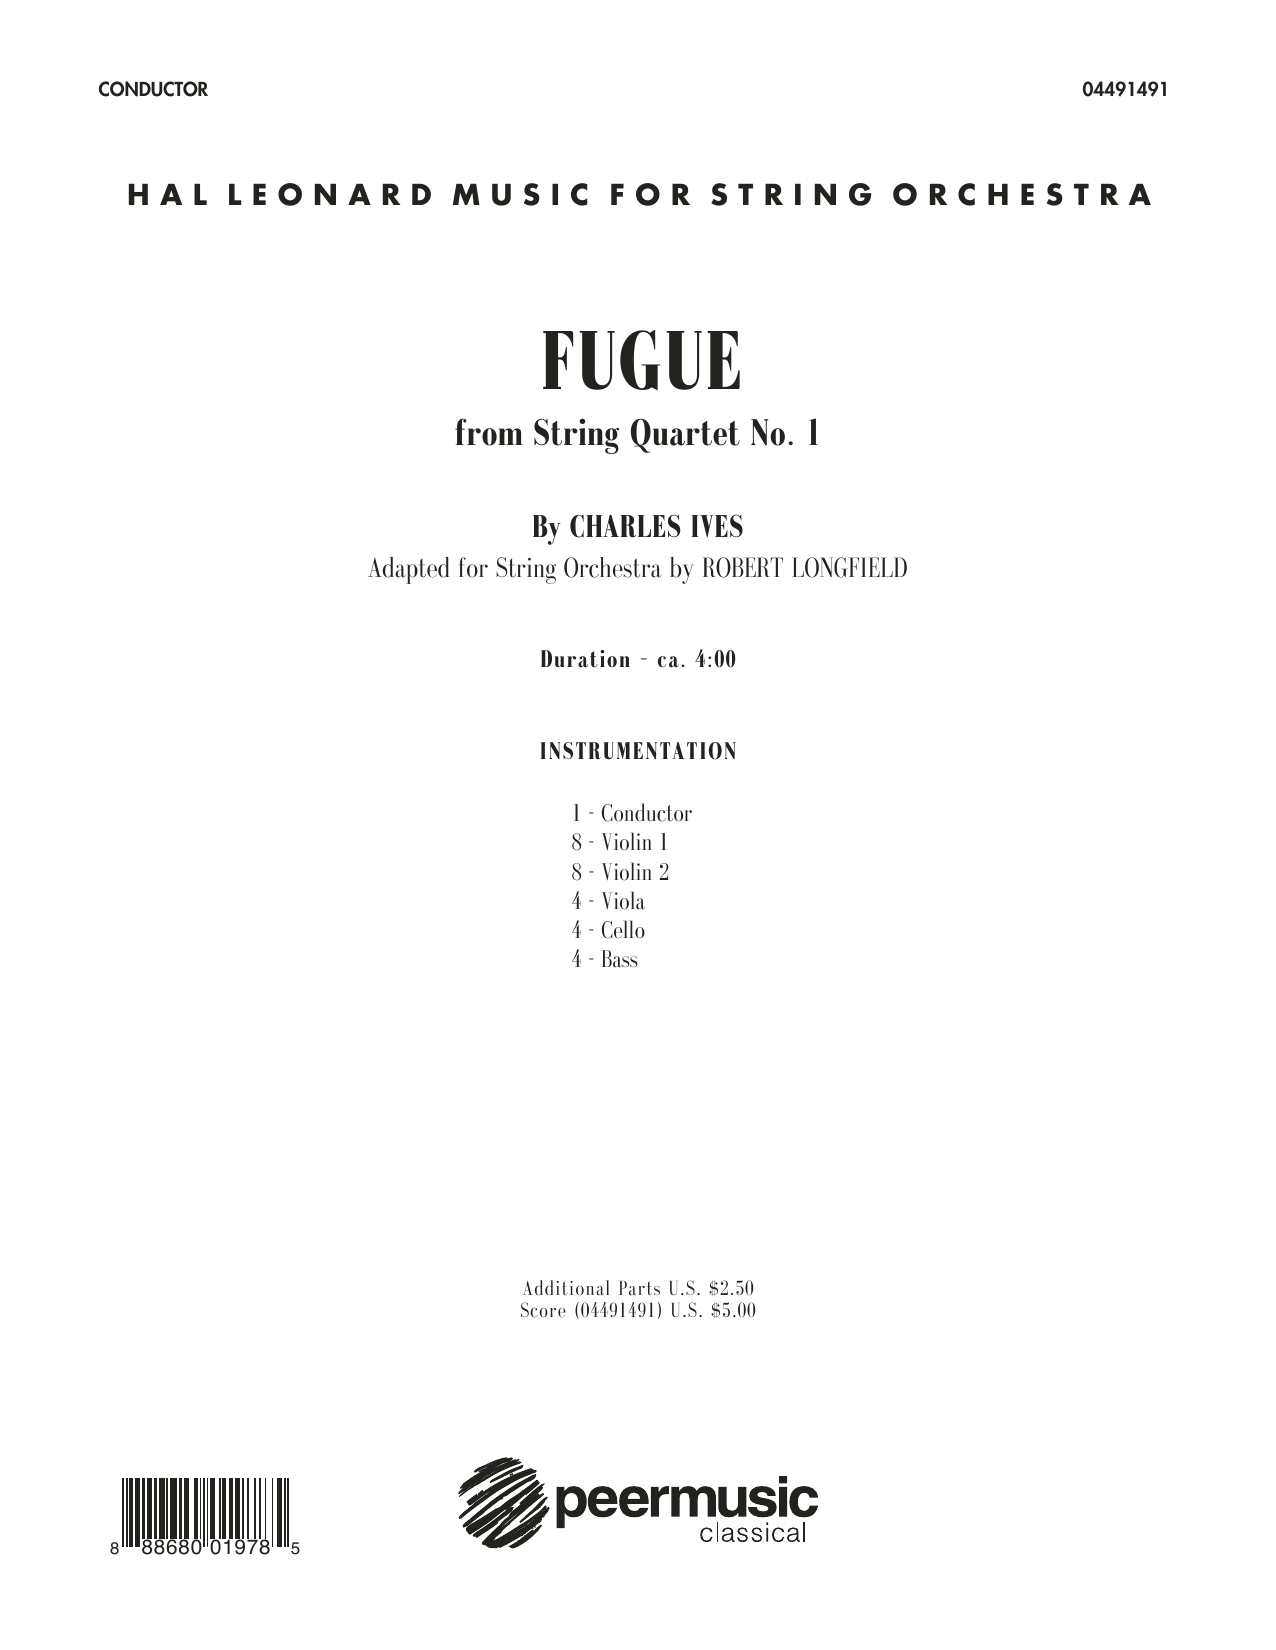 Download Robert Longfield Fugue from String Quartet No. 1 - Condu Sheet Music